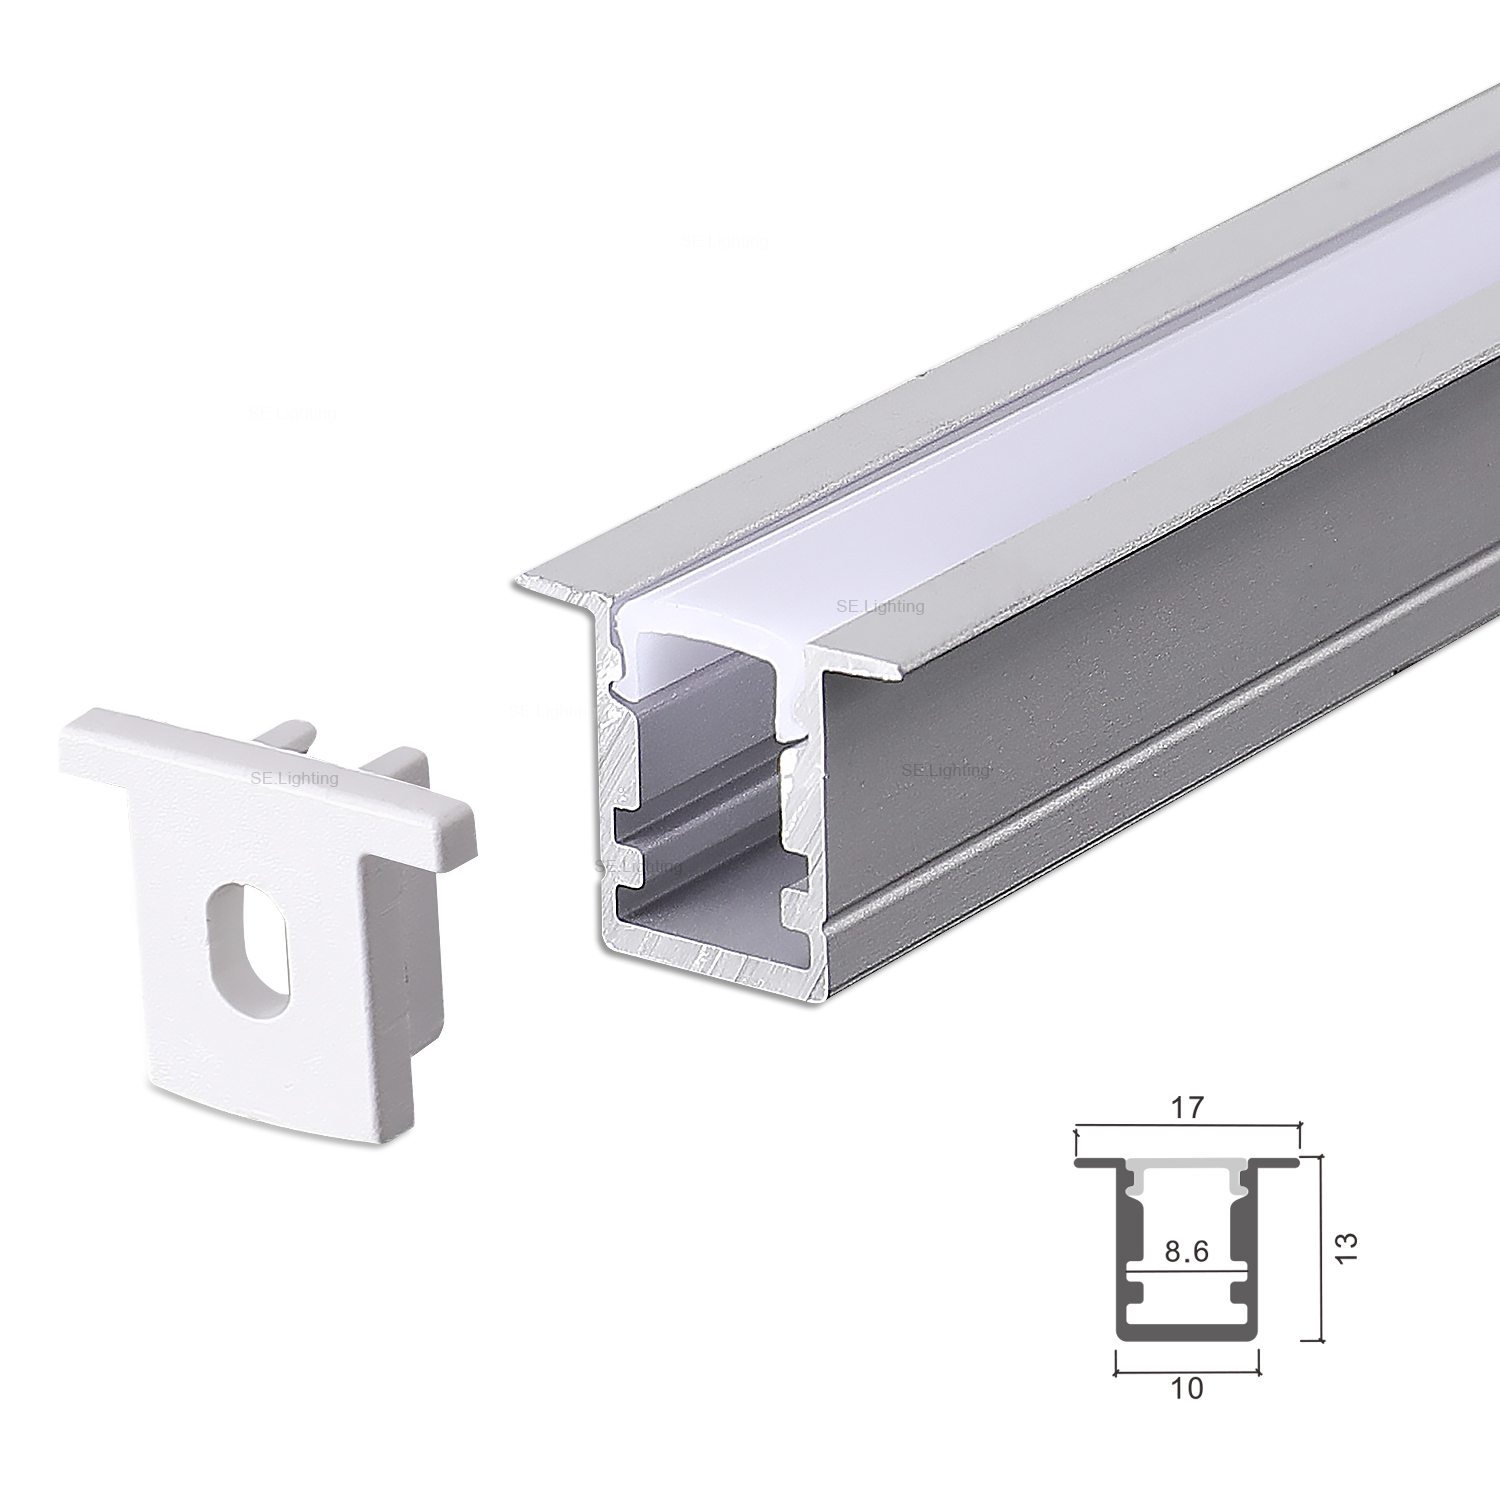 Slim Low Profile LED Aluminum Profile O for slim linear LED strip lighting